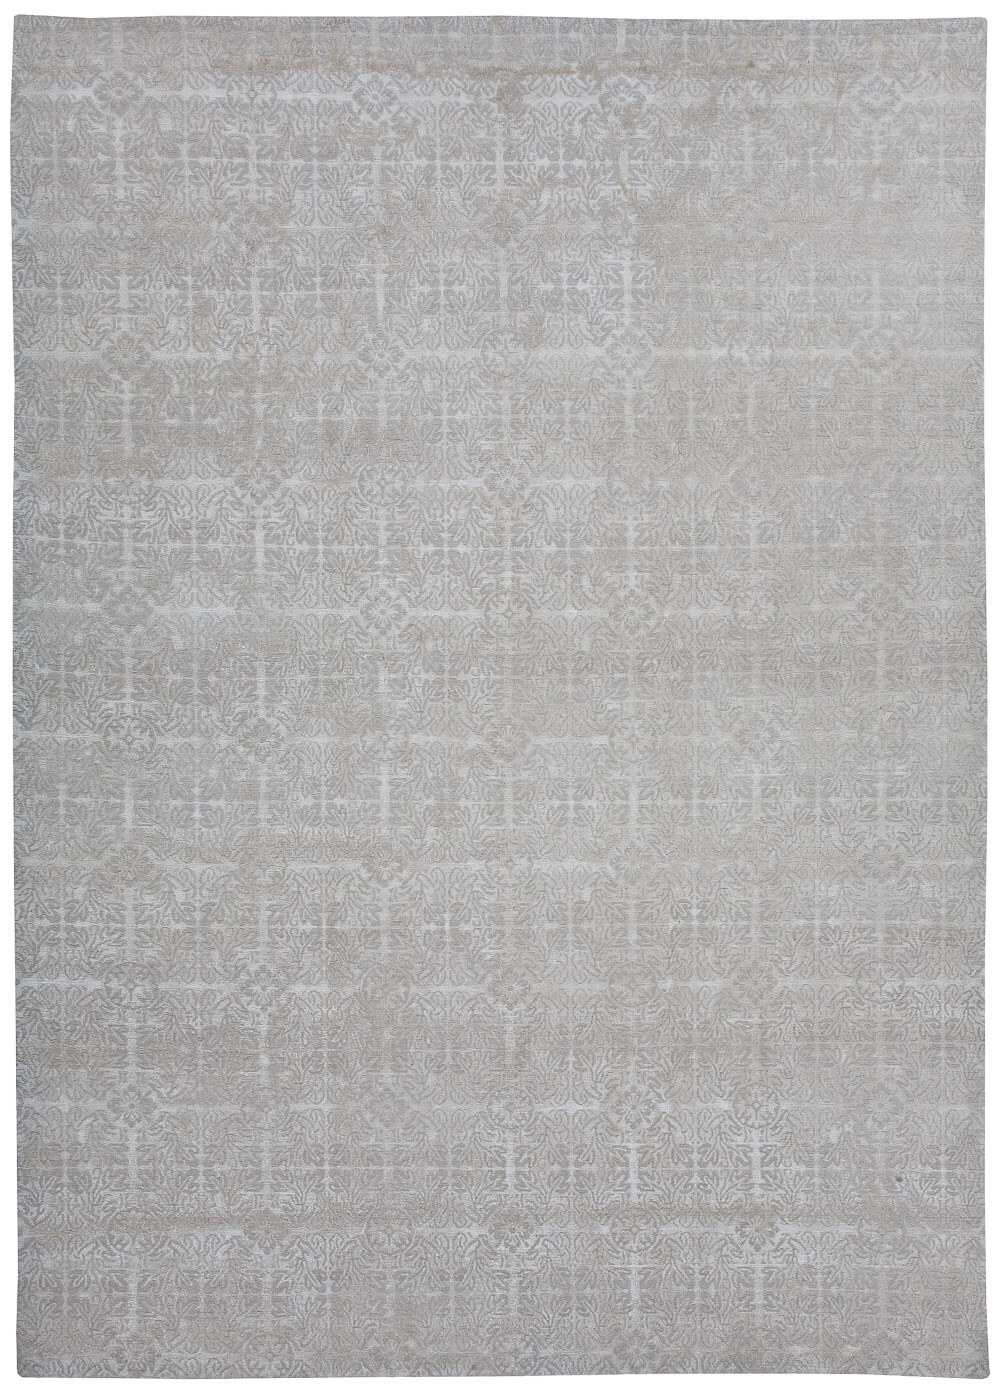 Bologna Grey Hand-woven Luxury Rug ☞ Size: 200 x 300 cm